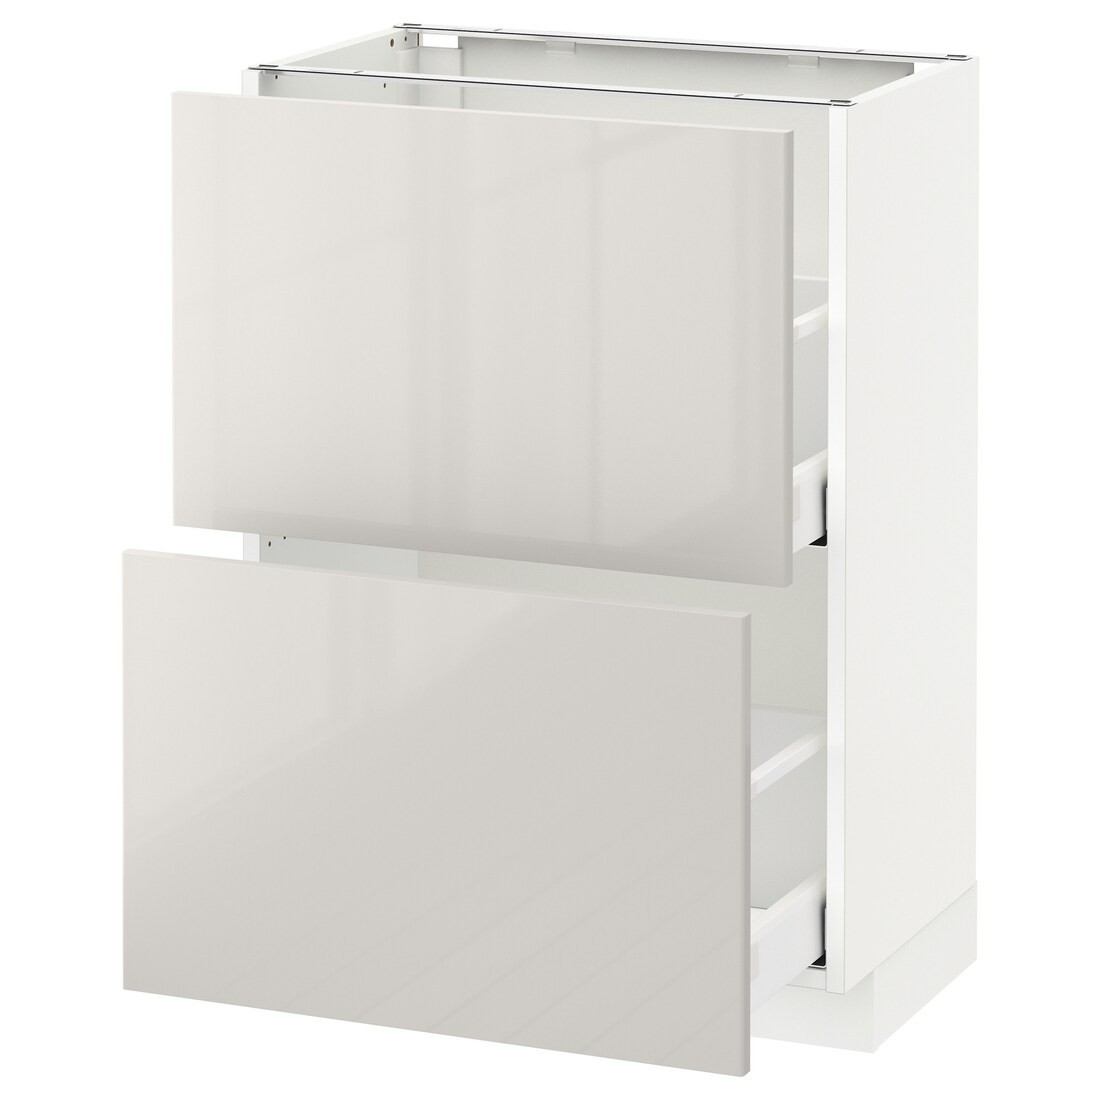 IKEA METOD МЕТОД / MAXIMERA МАКСИМЕРА Шкаф / 2 ящика, белый / Ringhult светло-серый, 60x37 см 89142586 891.425.86